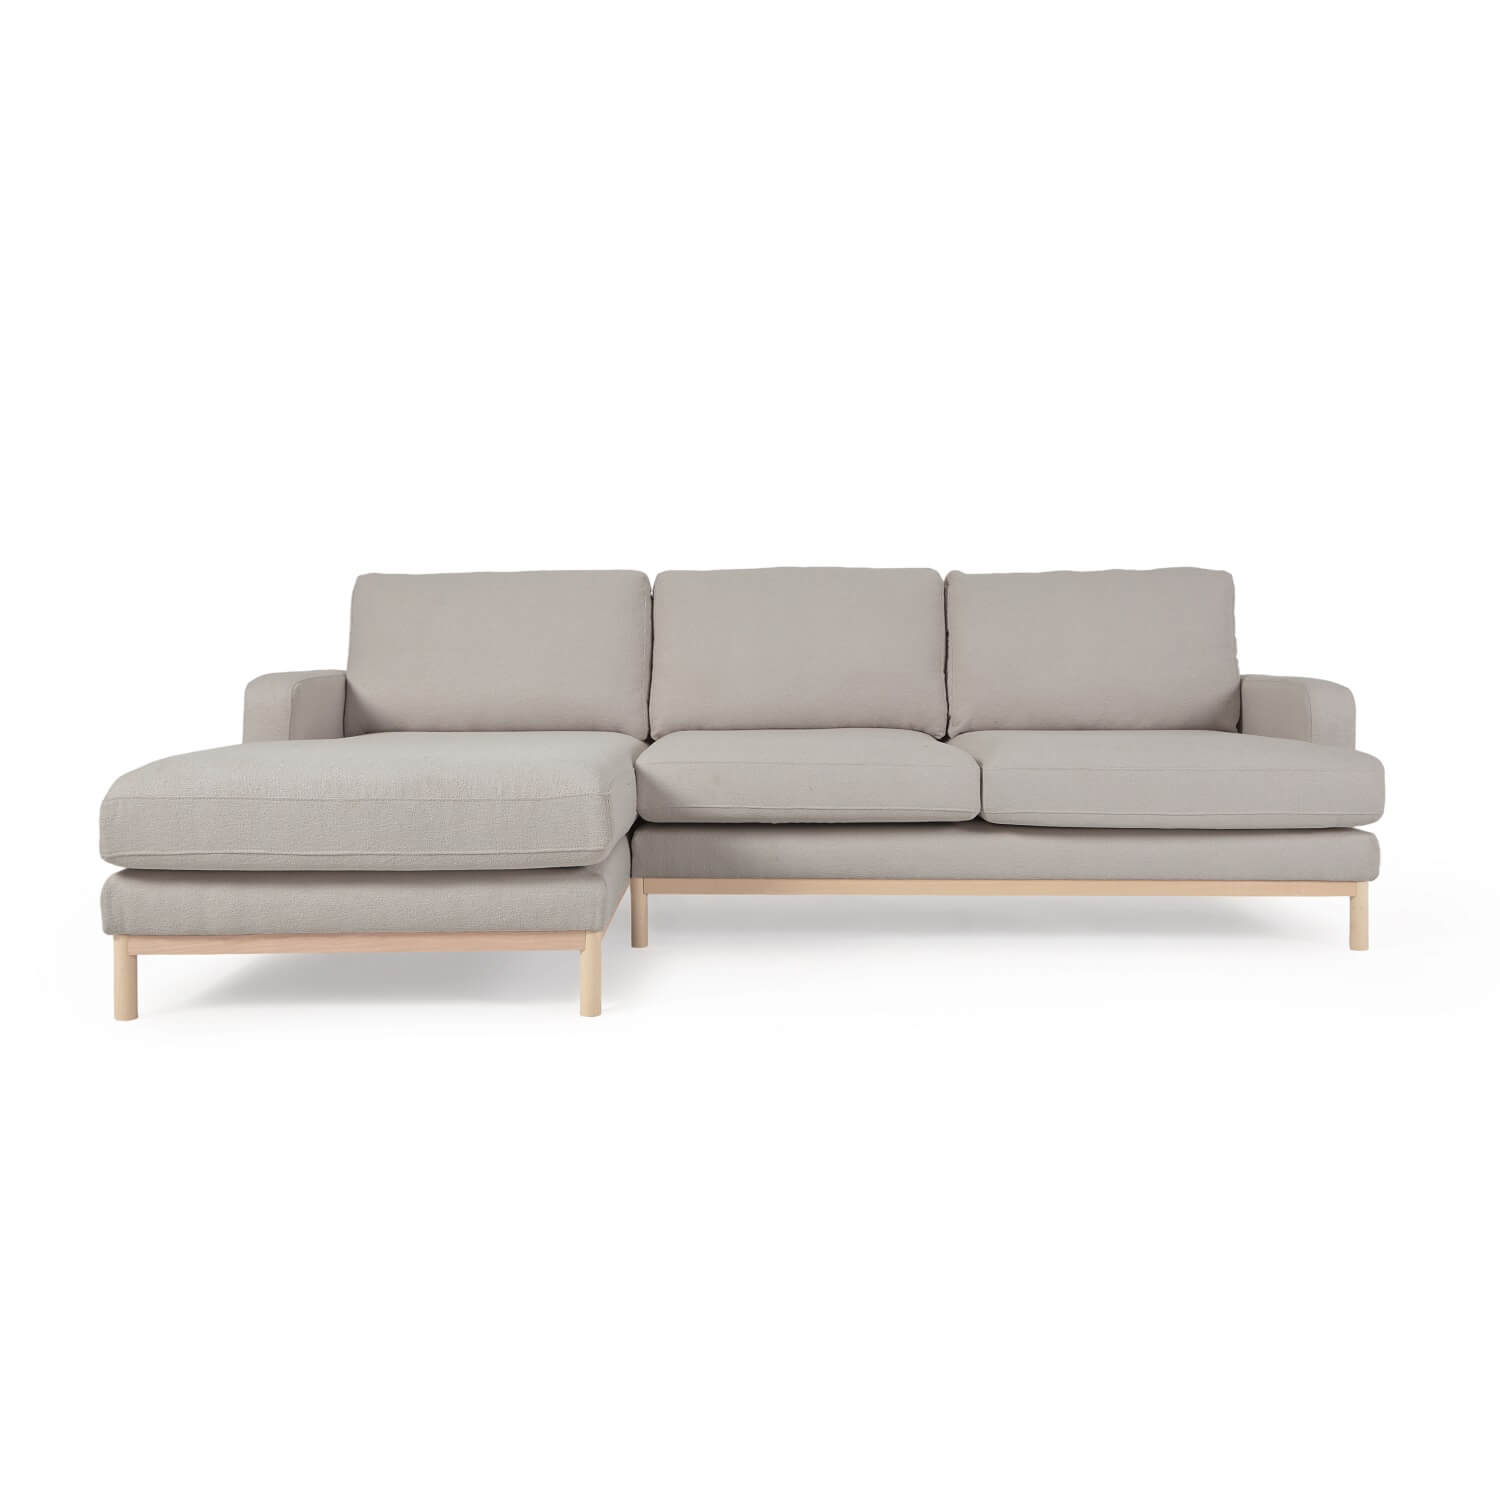 LAFORMA Mihaela 3 pers. sofa med venstre chaiselong - grå mikrobouclé og natur bøgetræ